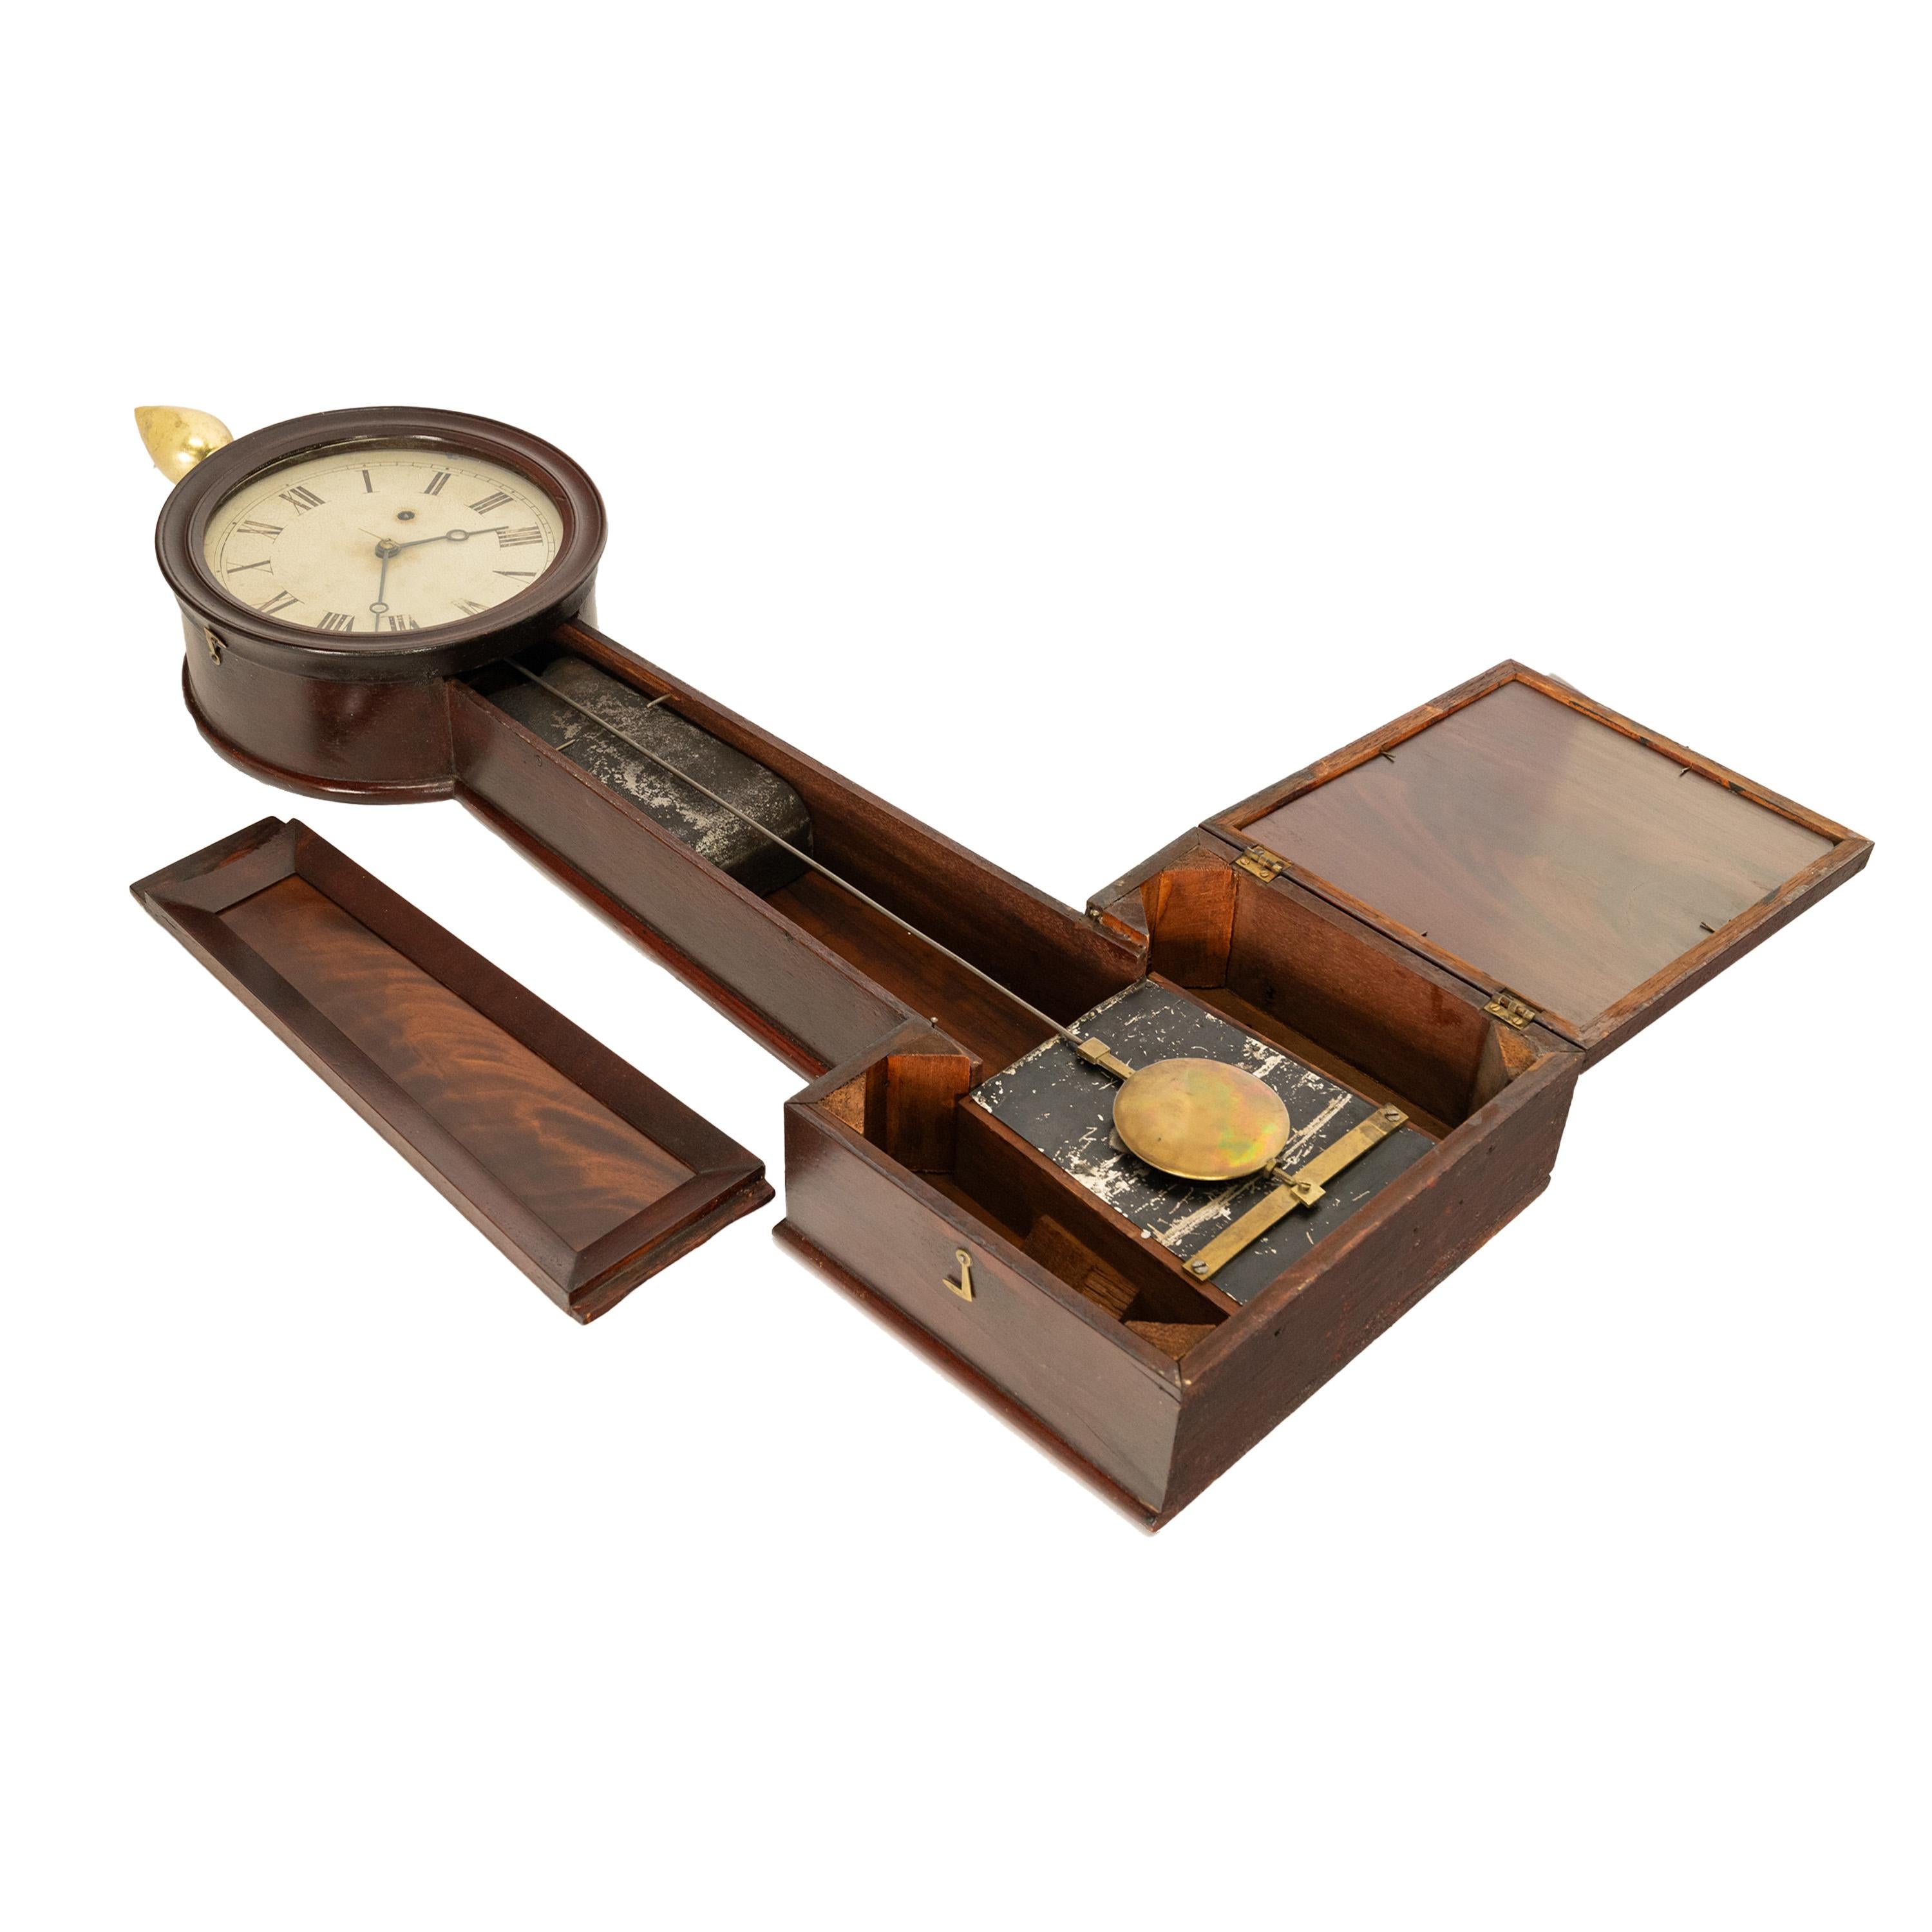 Antique American Simon Willard & Son 8 Day Banjo Clock Patent Timepiece 1825 5